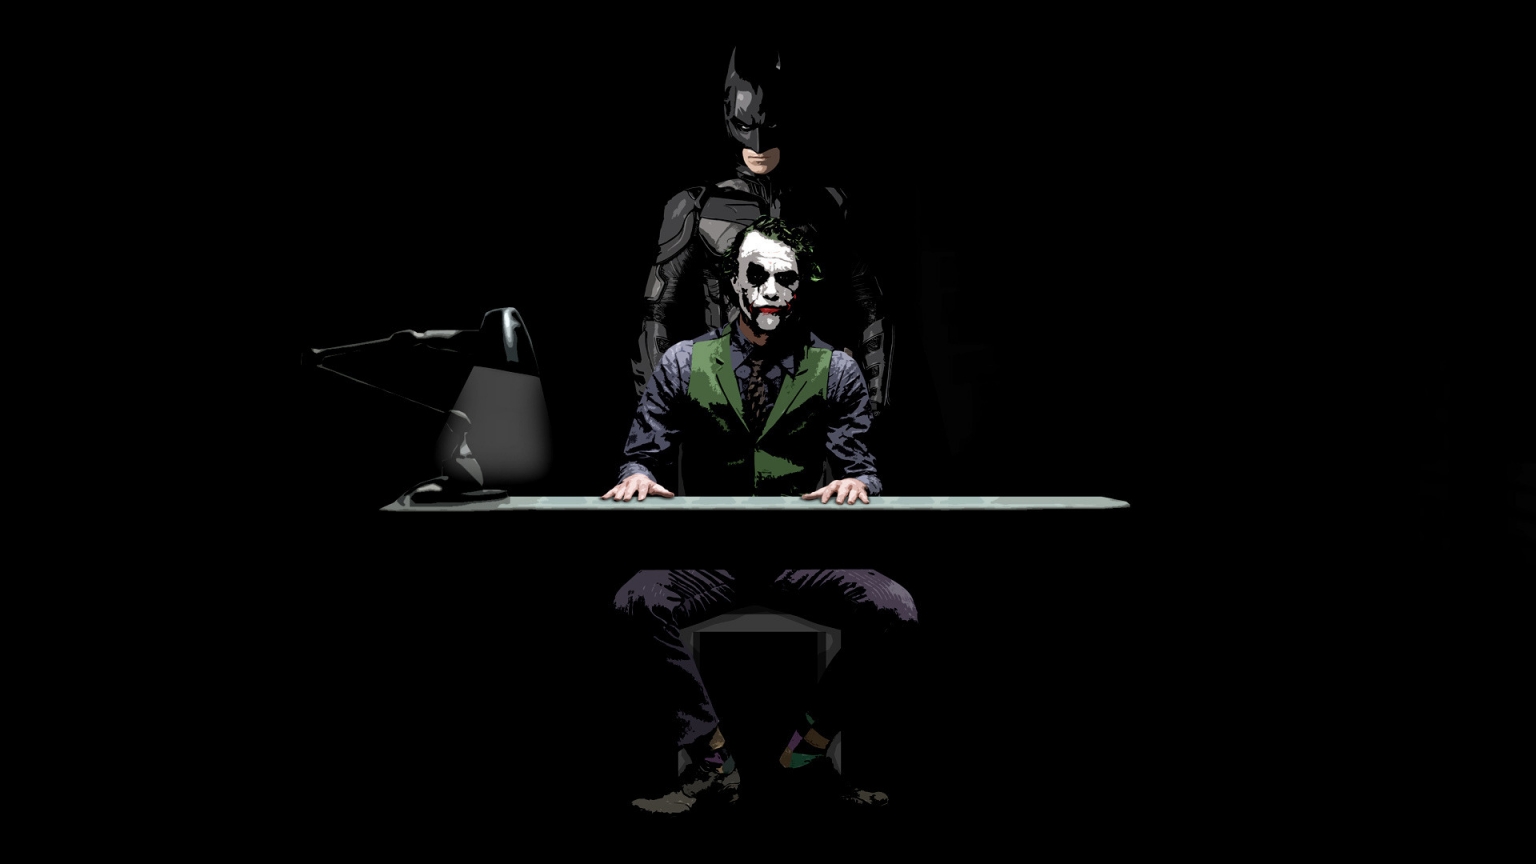 Batman and Joker Sketch for 1536 x 864 HDTV resolution